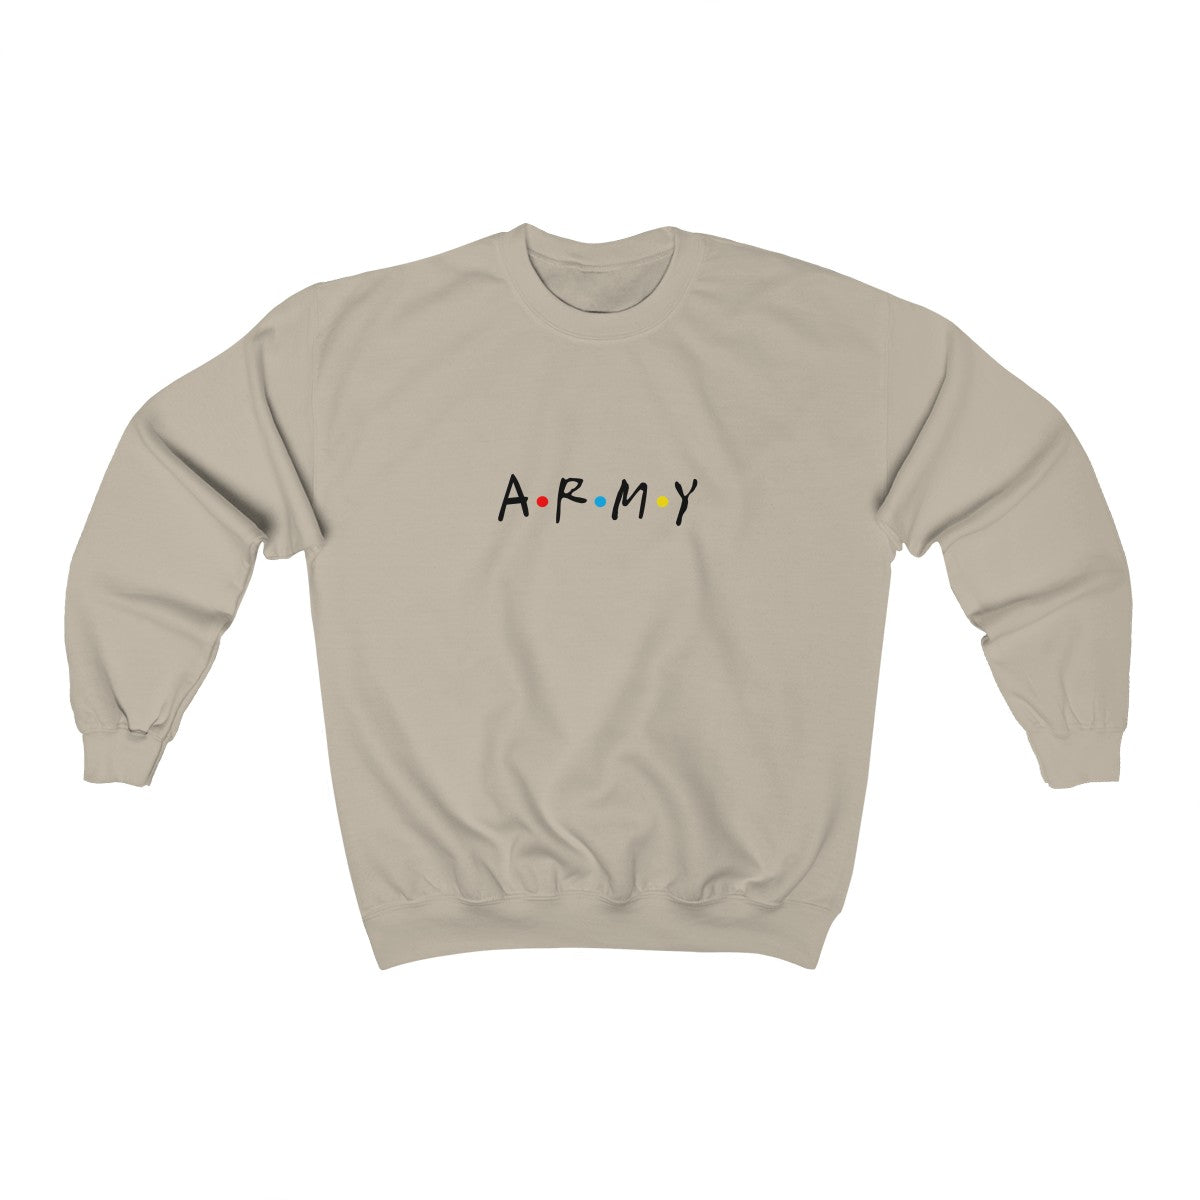 ARMY "Friends" Style Sweatshirt